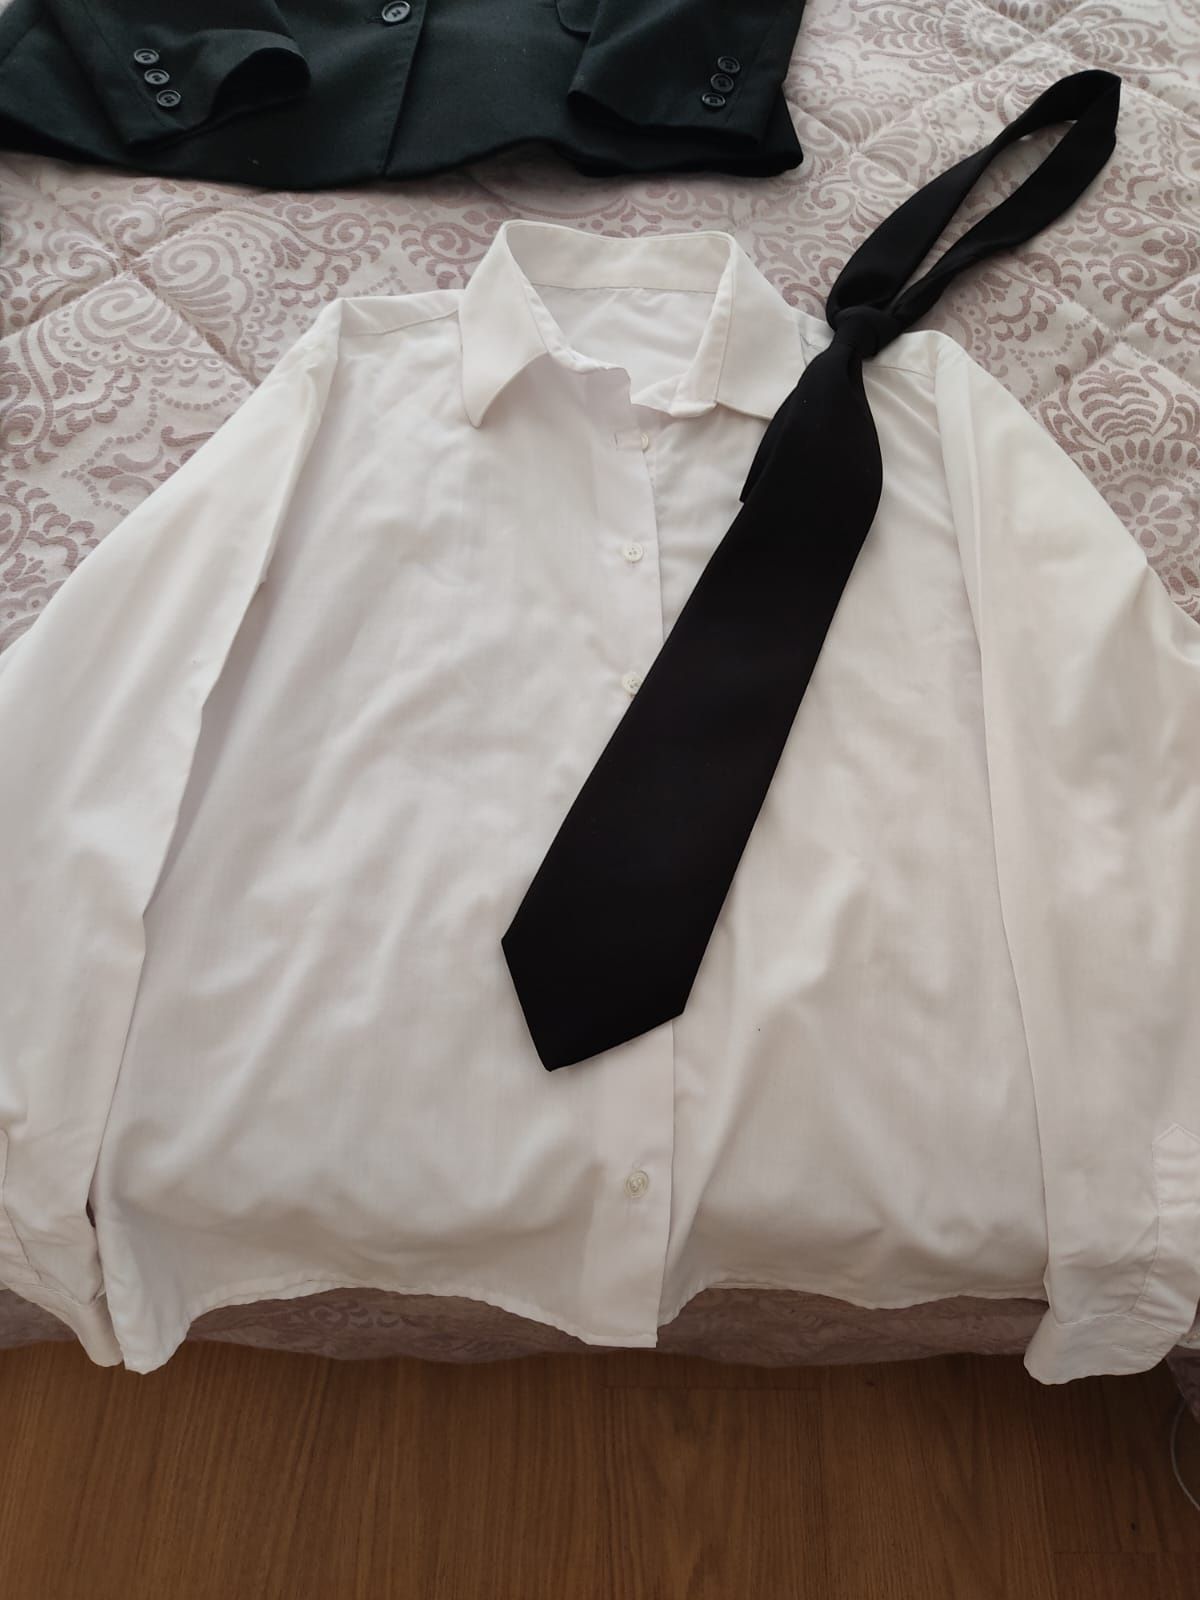 Camisa académica e gravata